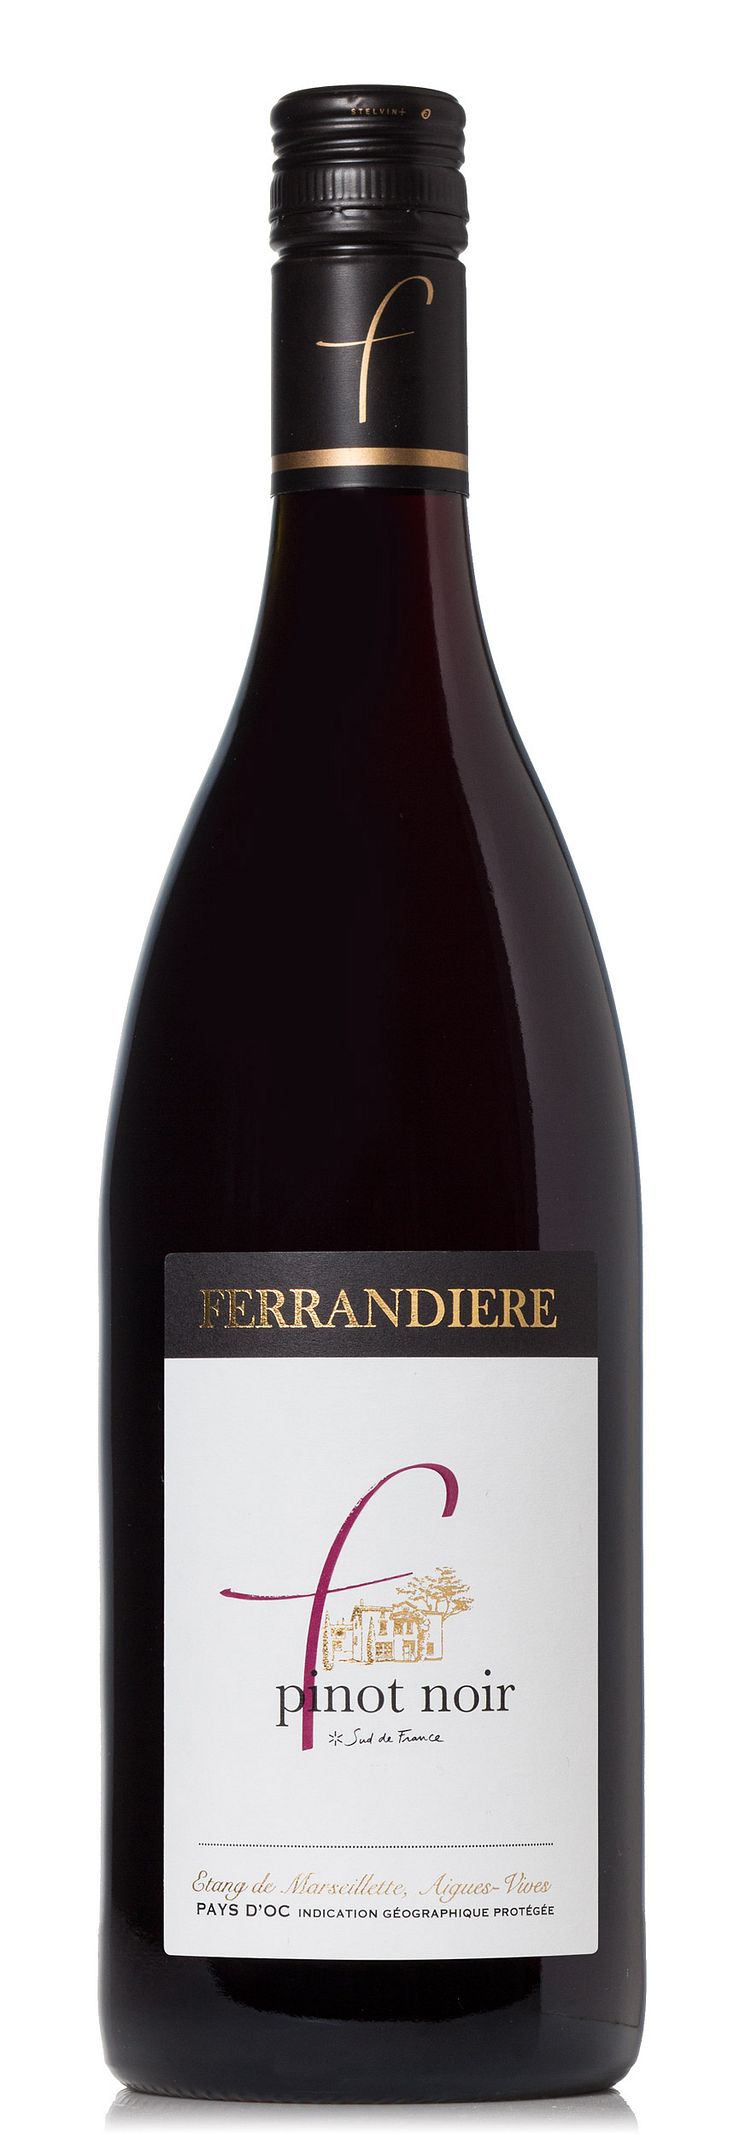 Nyhet i juni - Ferrandière Pinot Noir 2014.